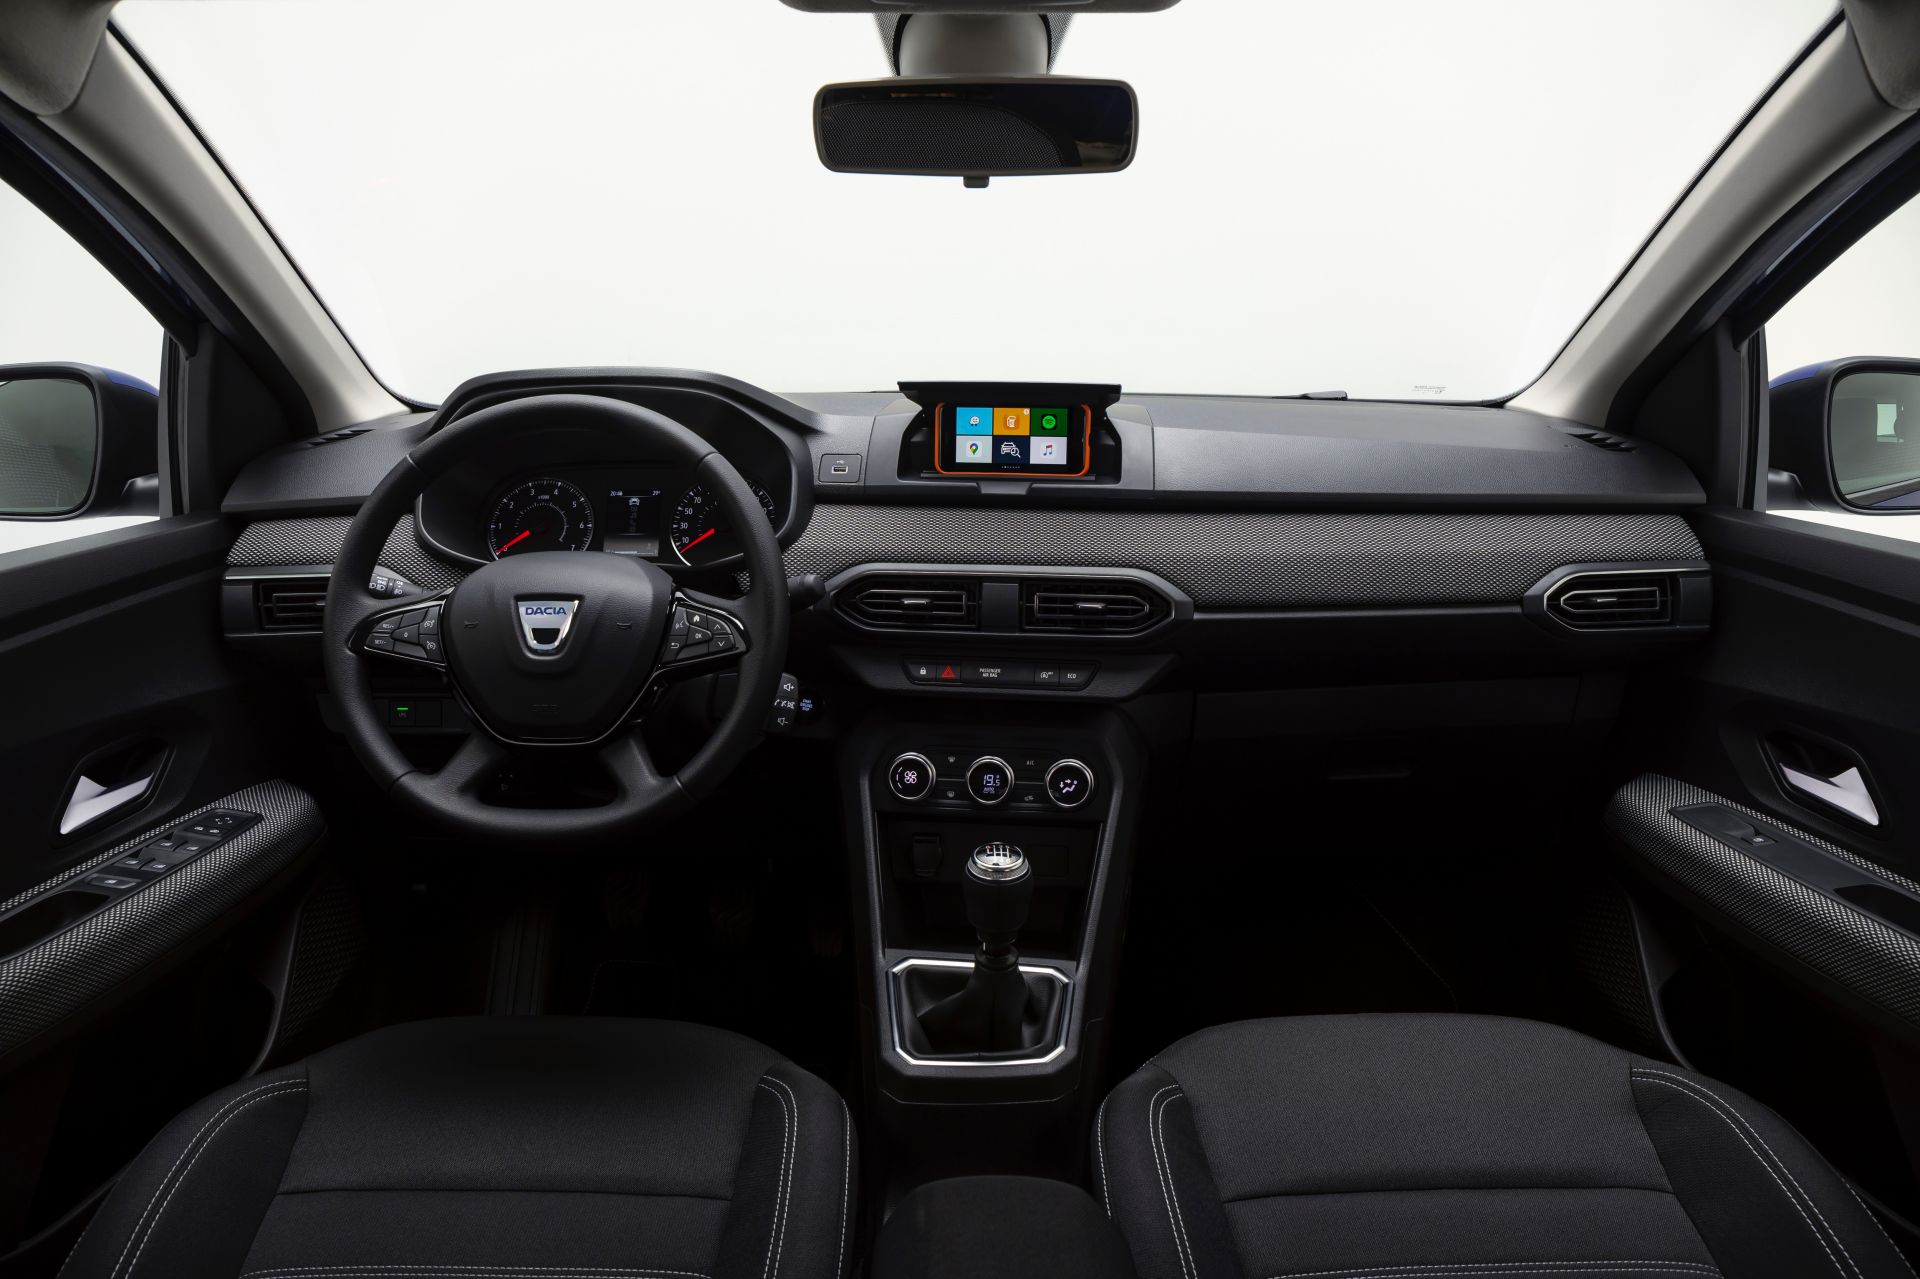 2021 Dacia Sandero, Stepway and Logan – Interior, Exterior and Drive